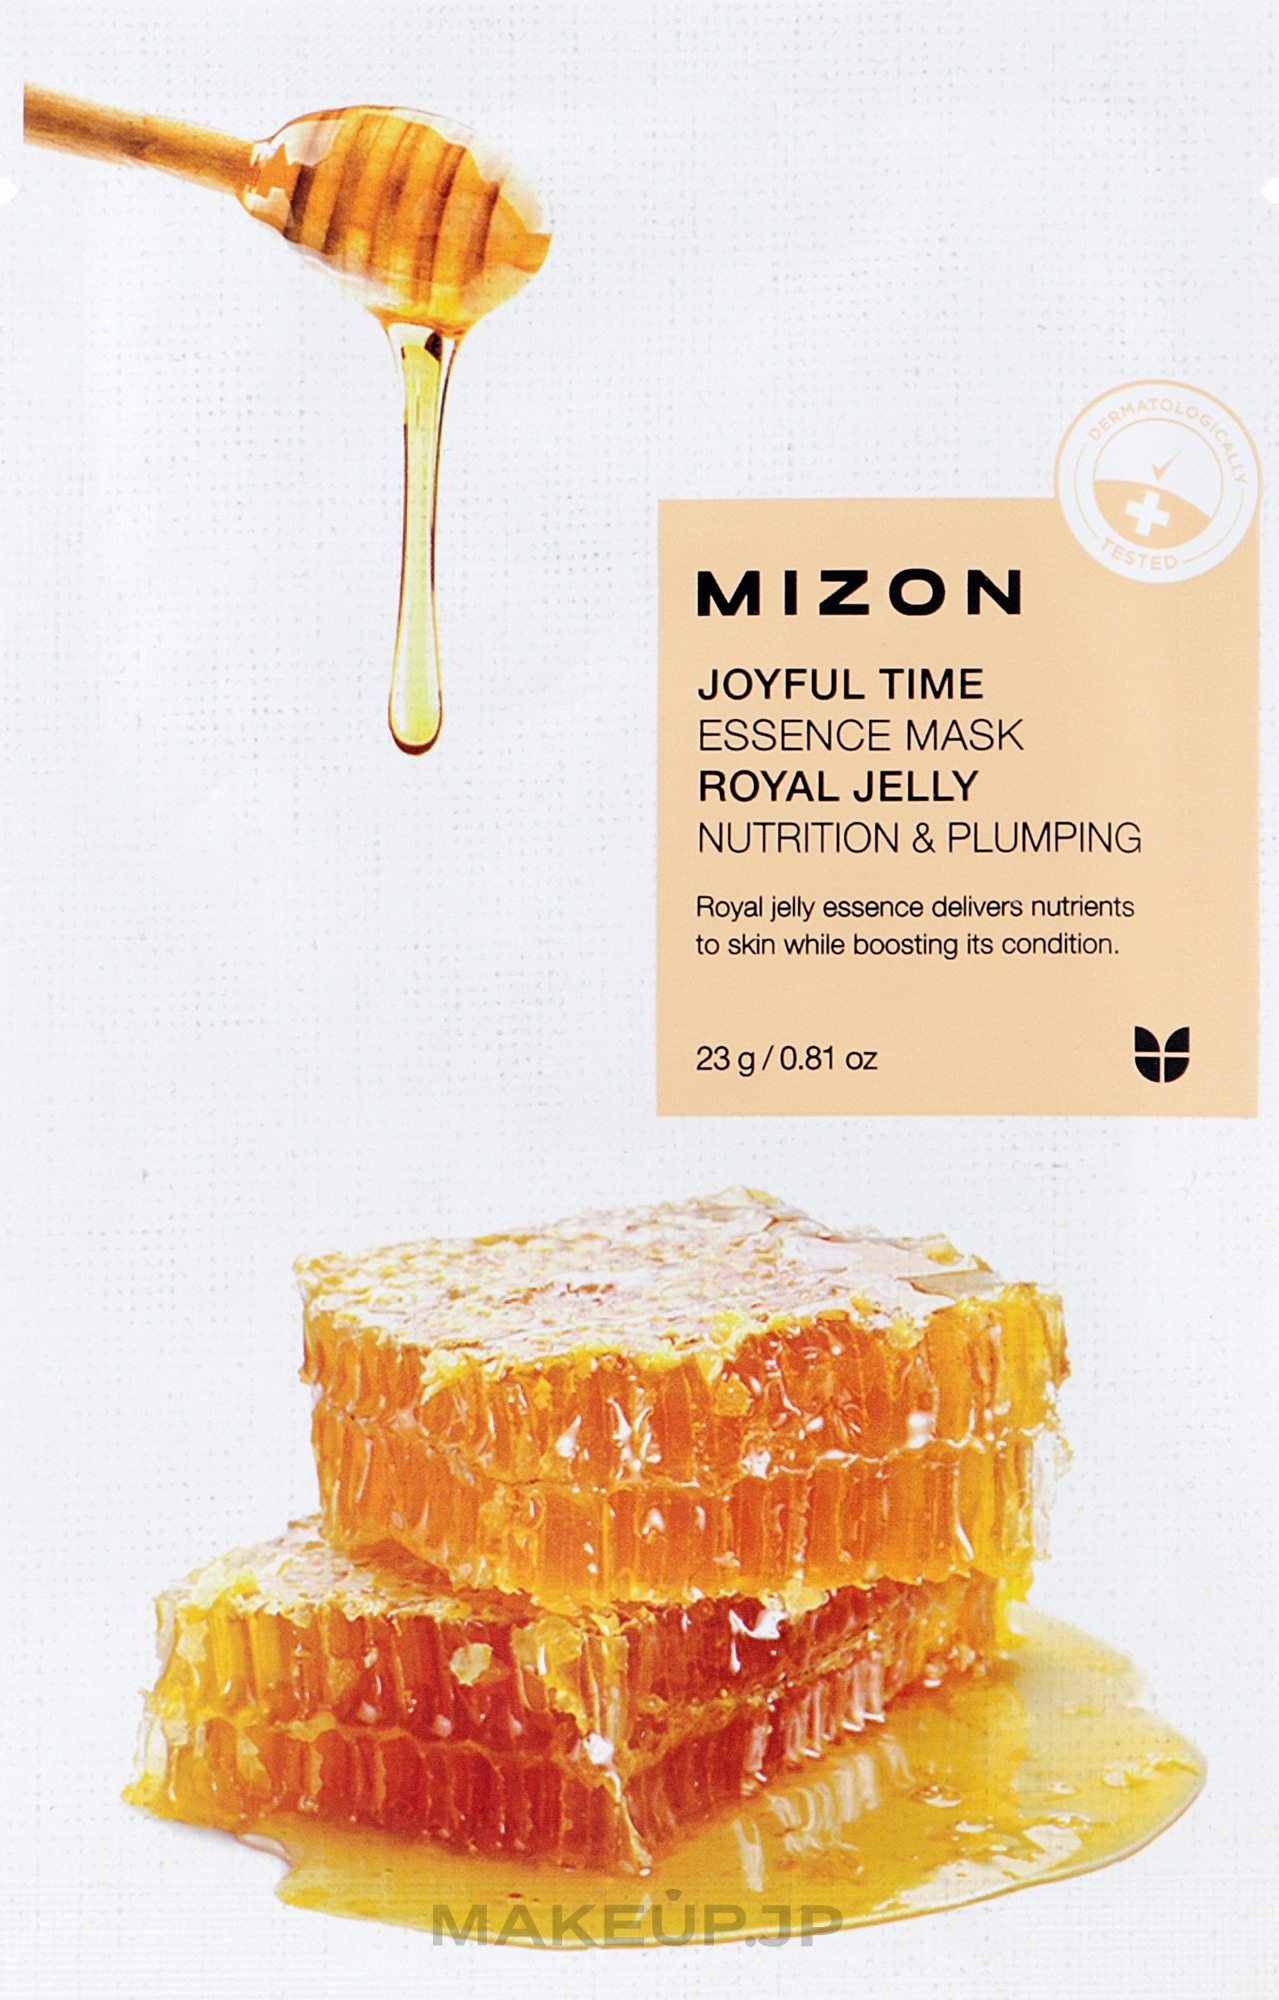 Royal Jelly Extract Sheet Mask - Mizon Joyful Time Essence Mask Royal Jelly — photo 23 g